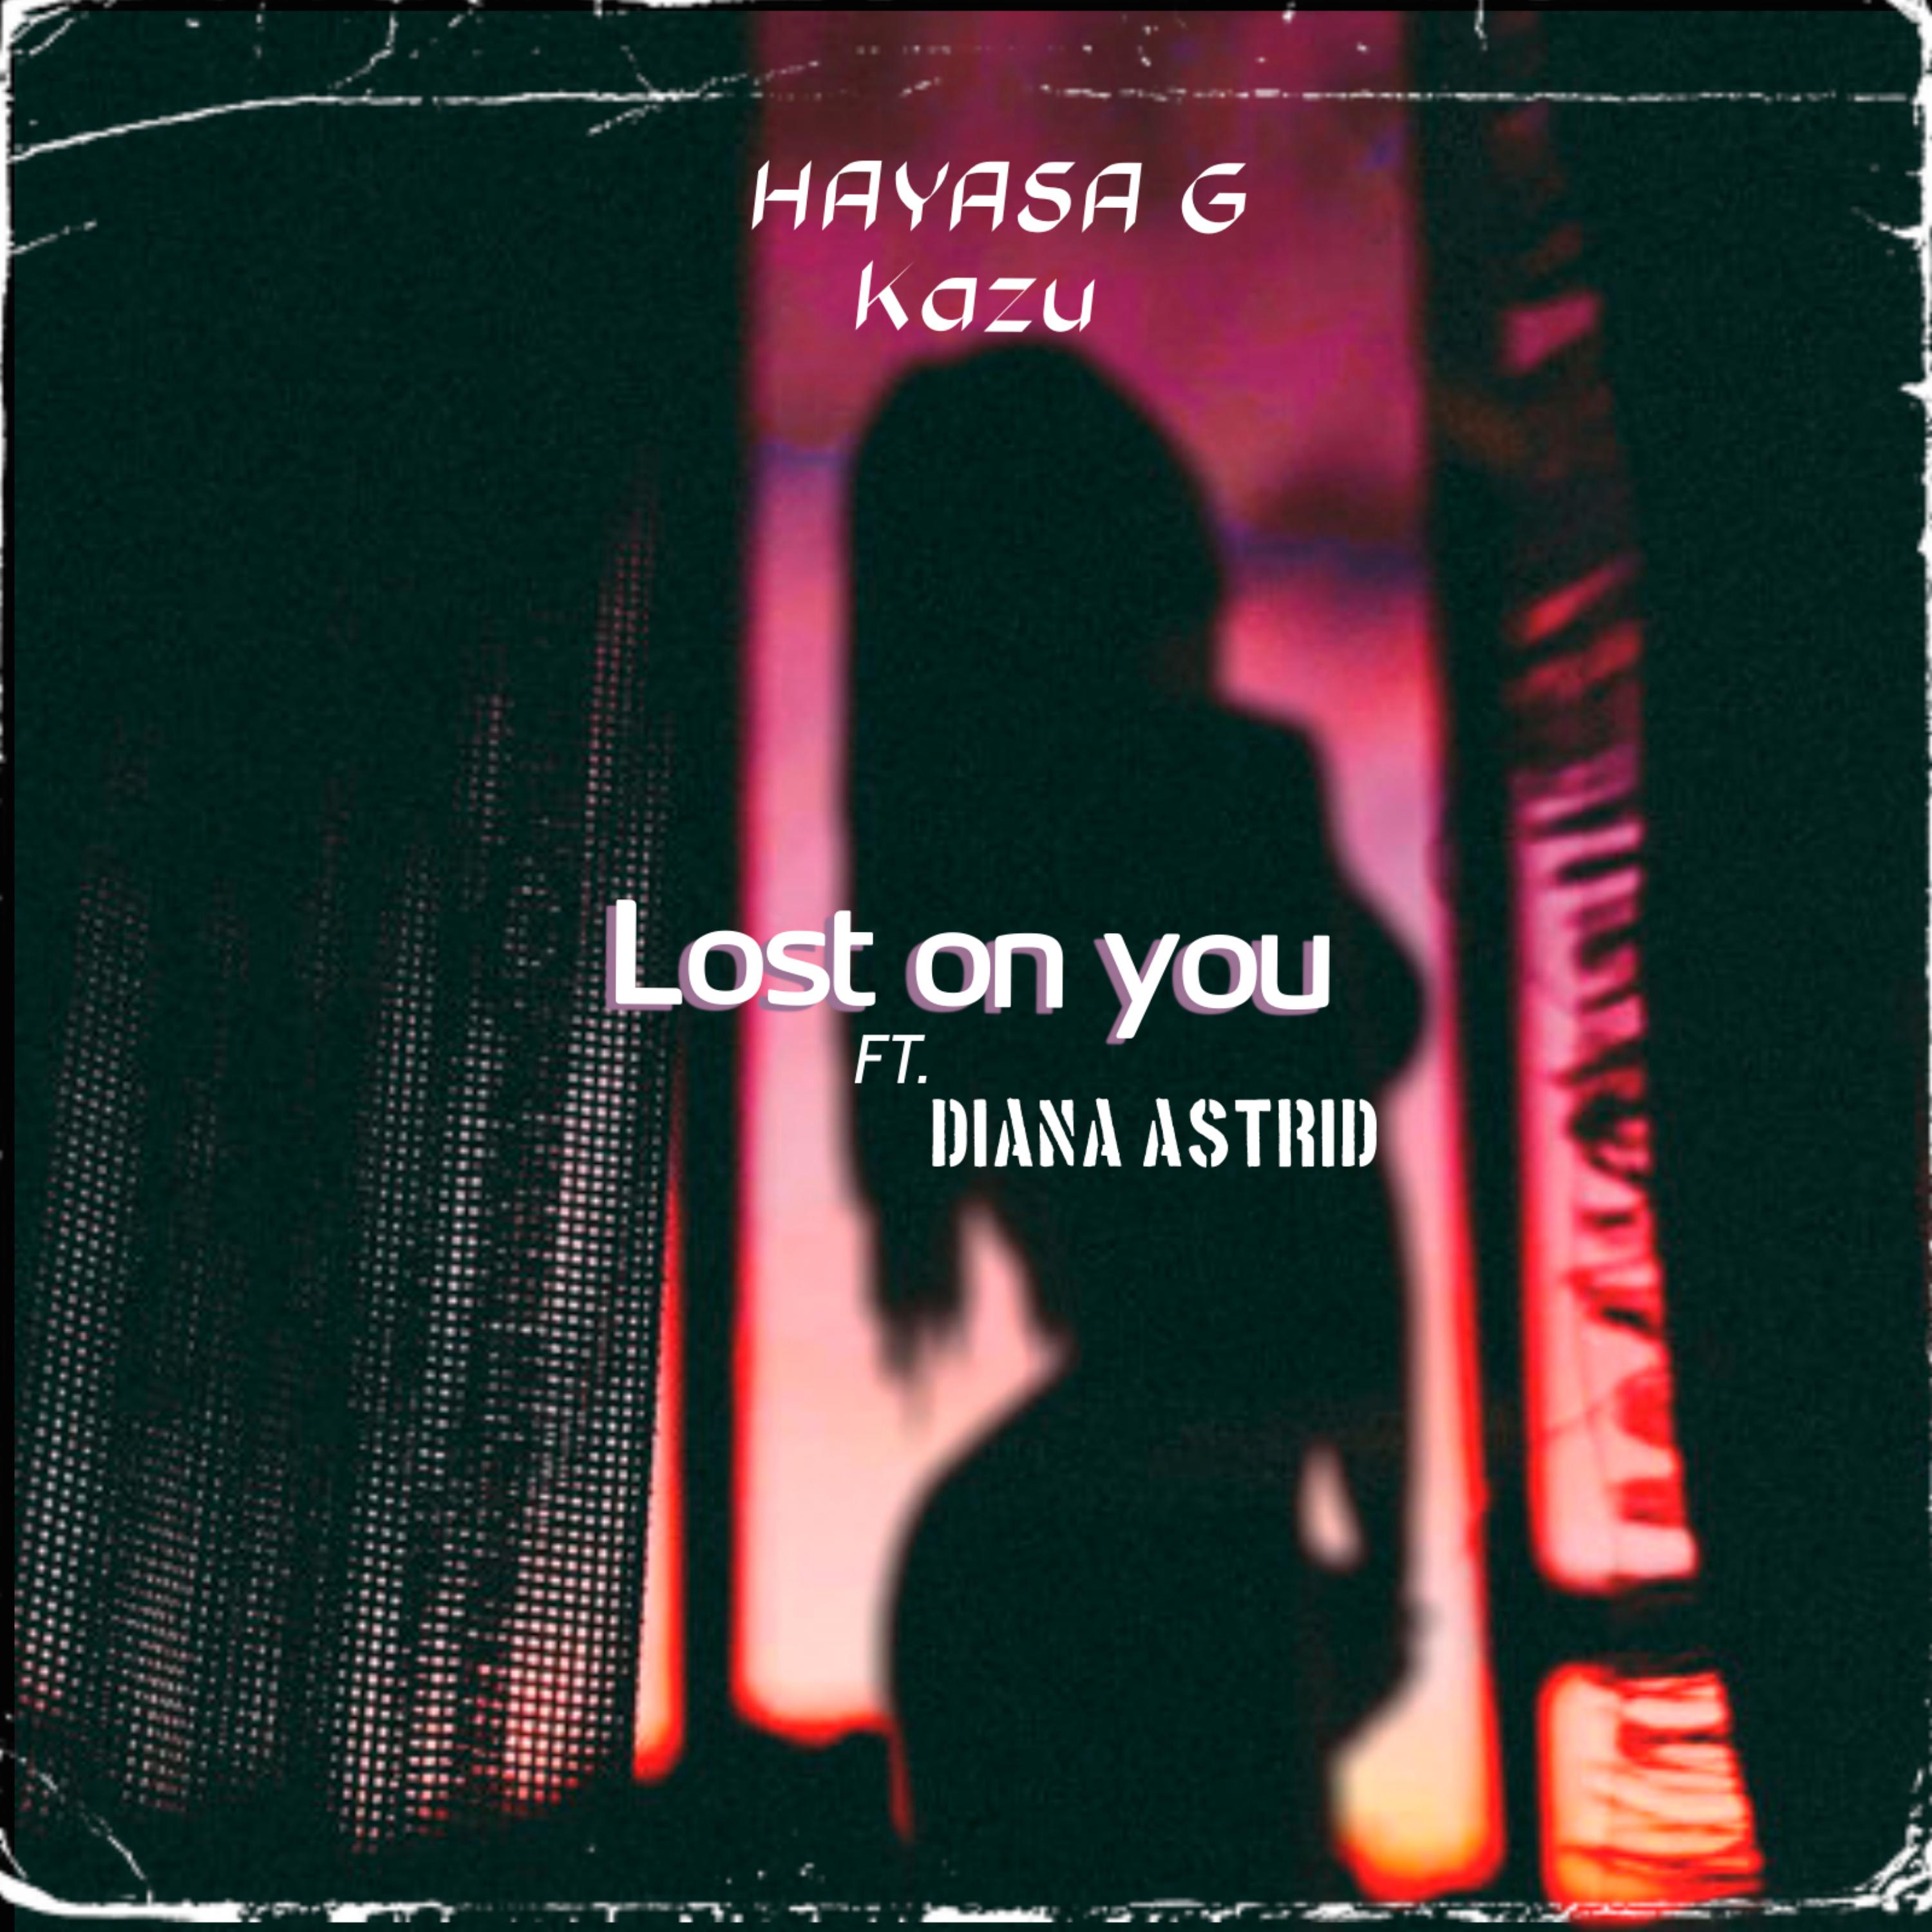 Lost On You歌词 歌手HAYASA G / Kazu / Diana Astrid-专辑Lost On You-单曲《Lost On You》LRC歌词下载